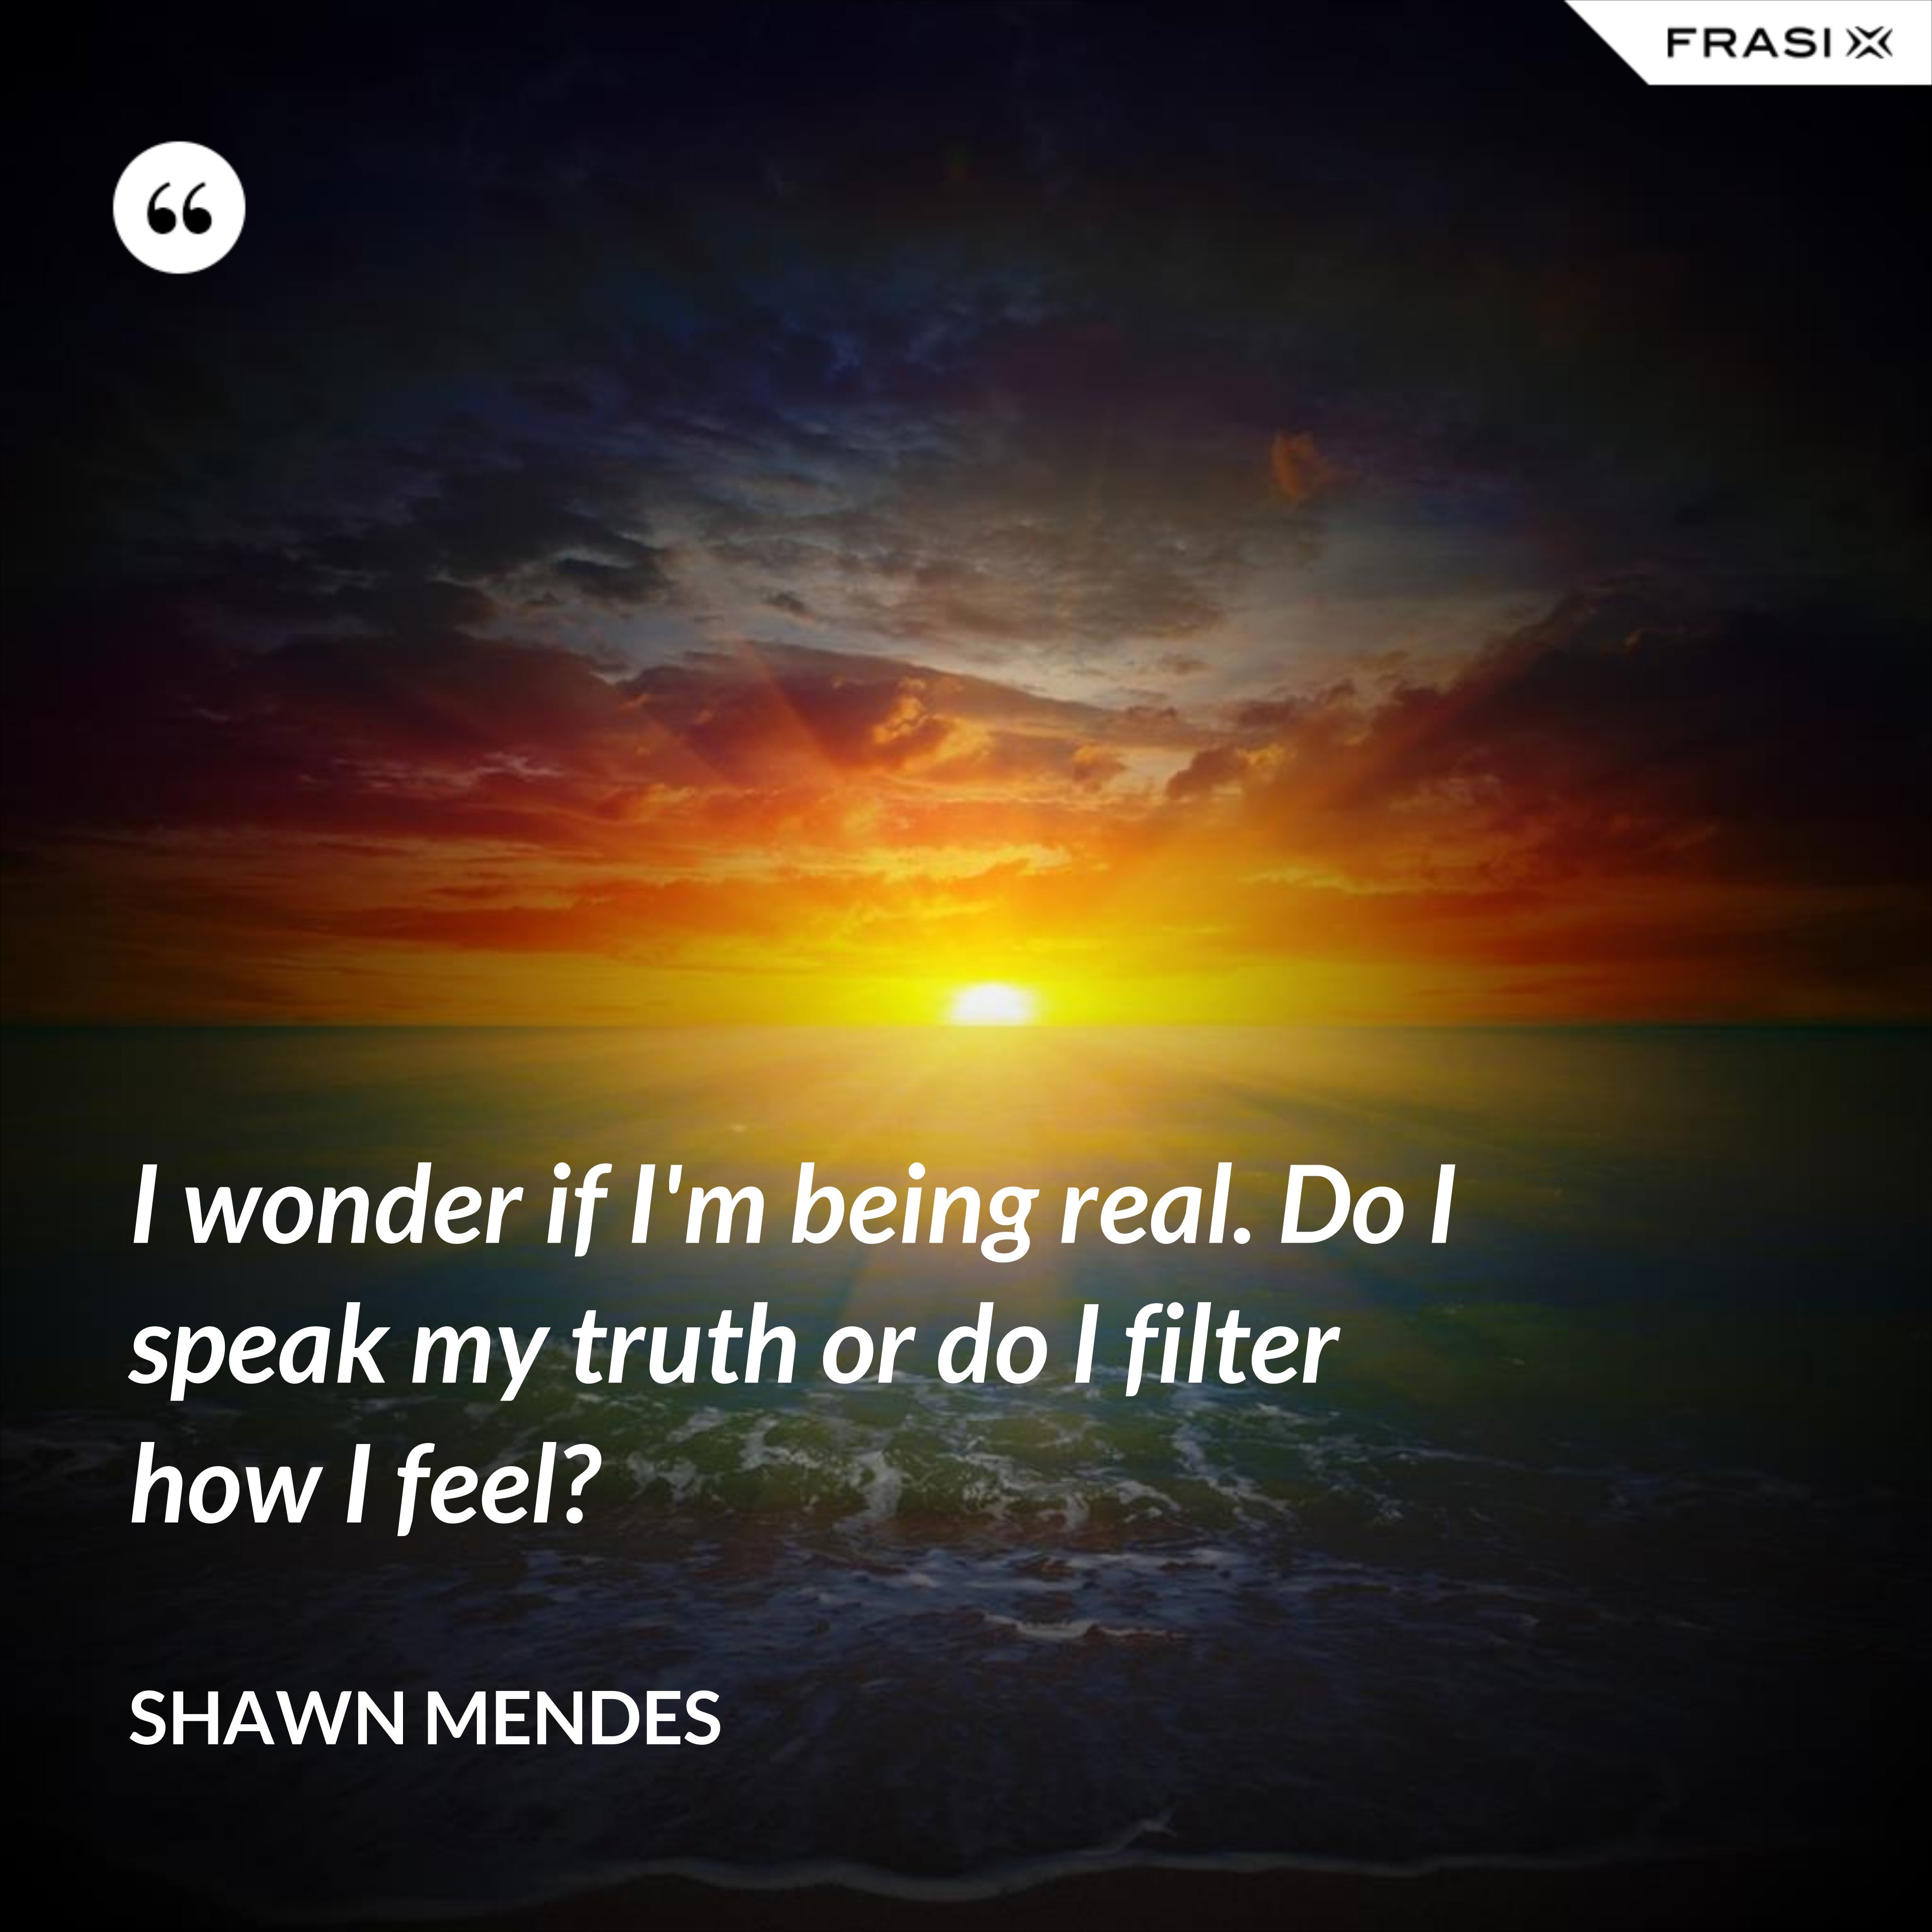 I wonder if I'm being real. Do I speak my truth or do I filter how I feel? - Shawn Mendes